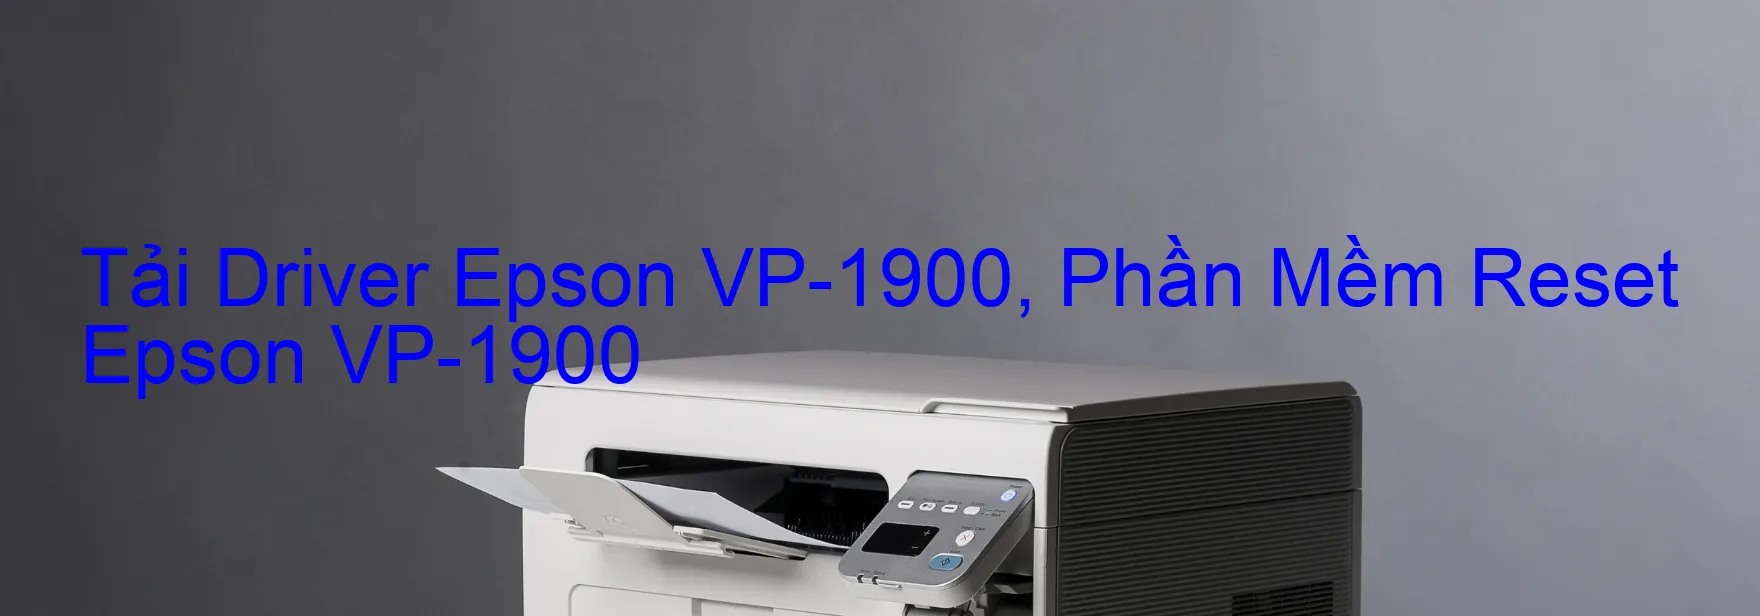 Driver Epson VP-1900, Phần Mềm Reset Epson VP-1900